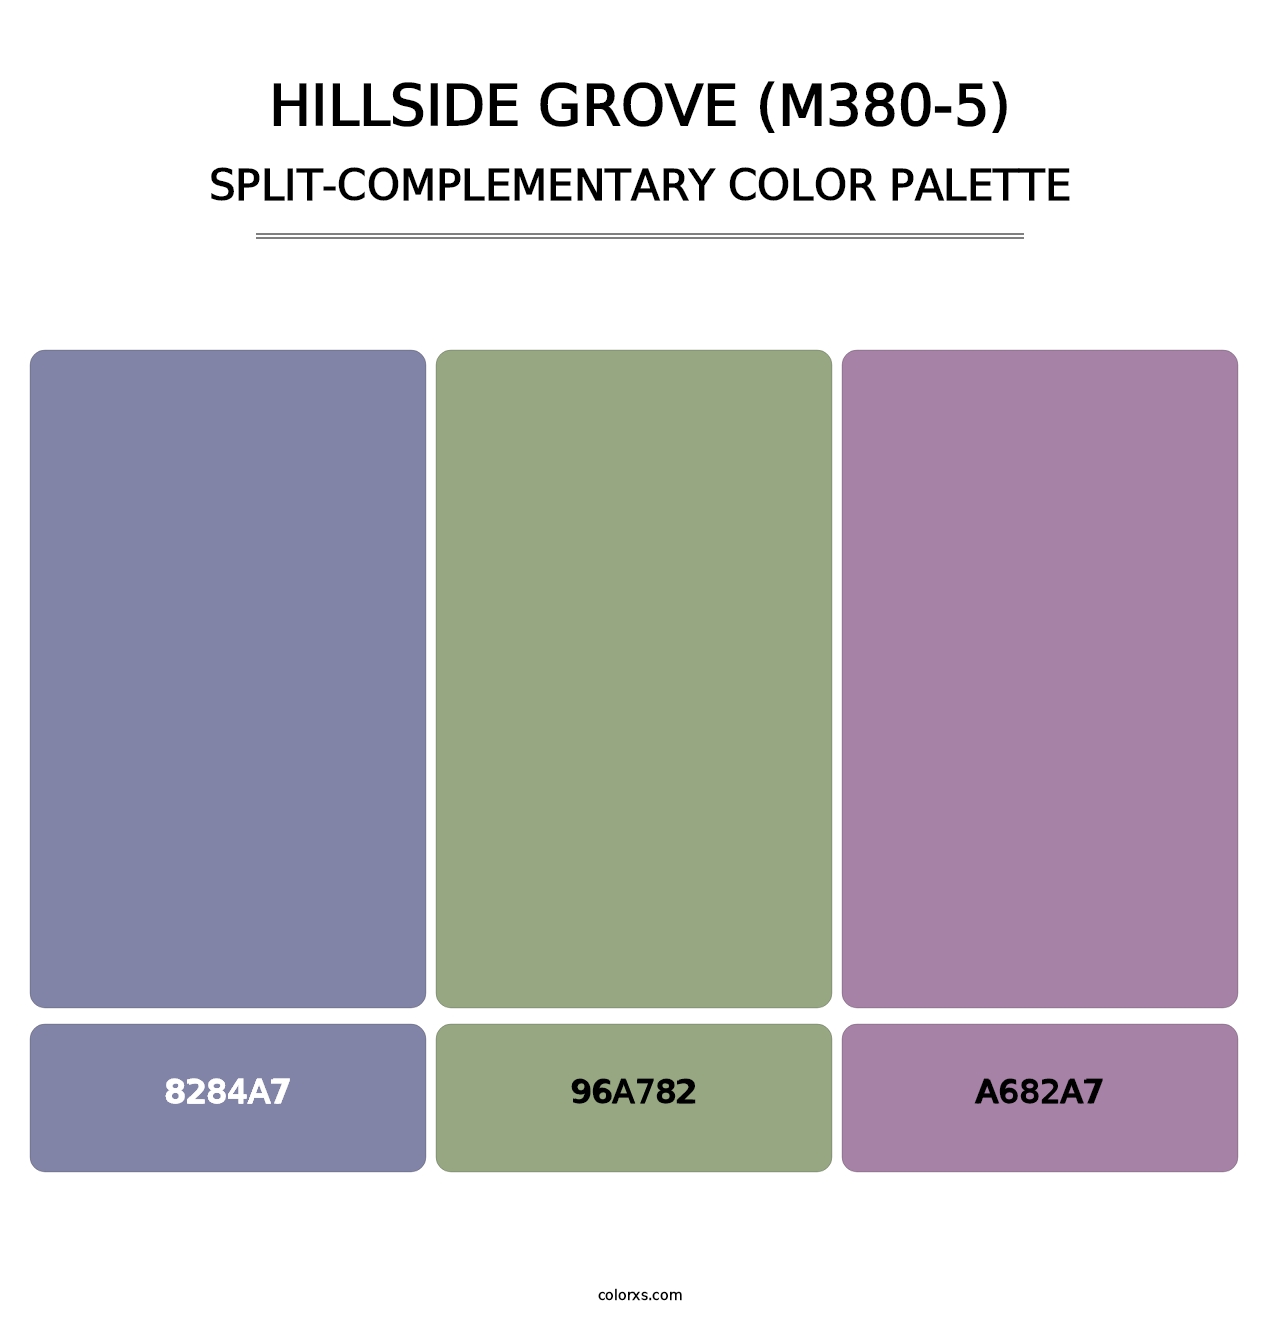 Hillside Grove (M380-5) - Split-Complementary Color Palette